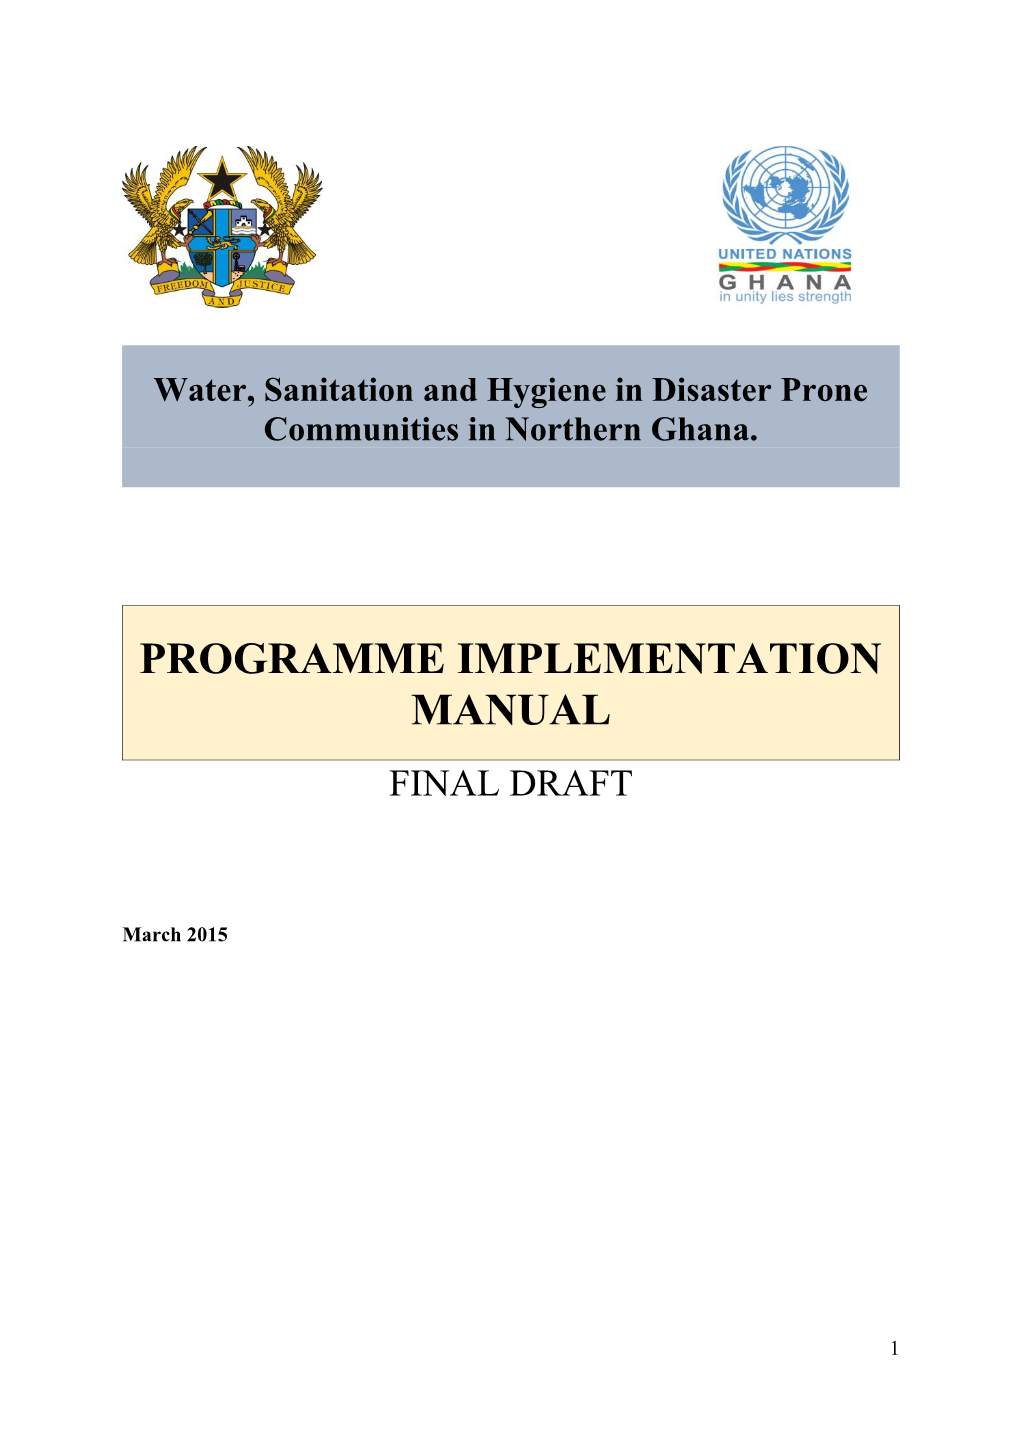 WASH Programme Document